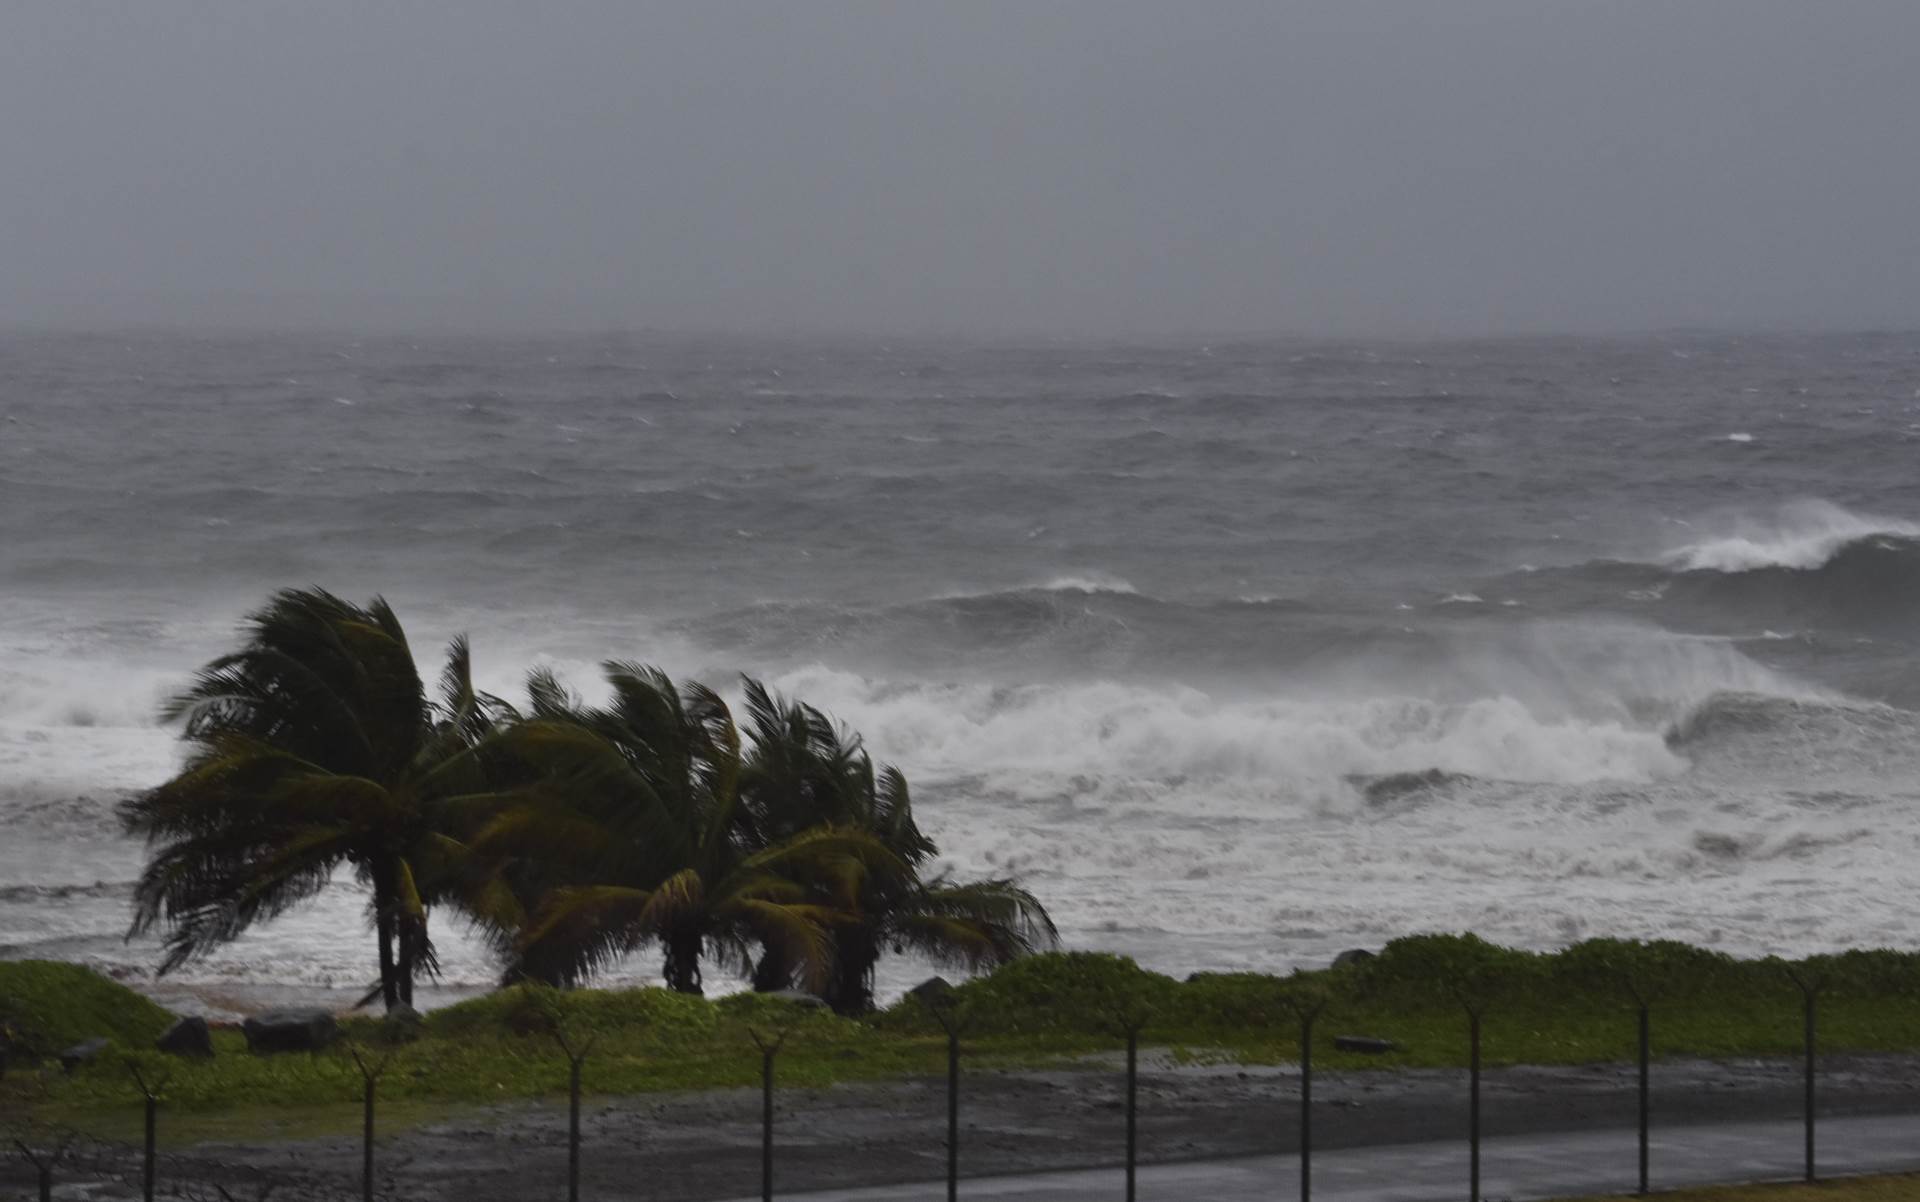  Uragan Elsa ne posustaje: Nakon što je opustošio Karibe, napreduje prema Kubi i Jamajki 